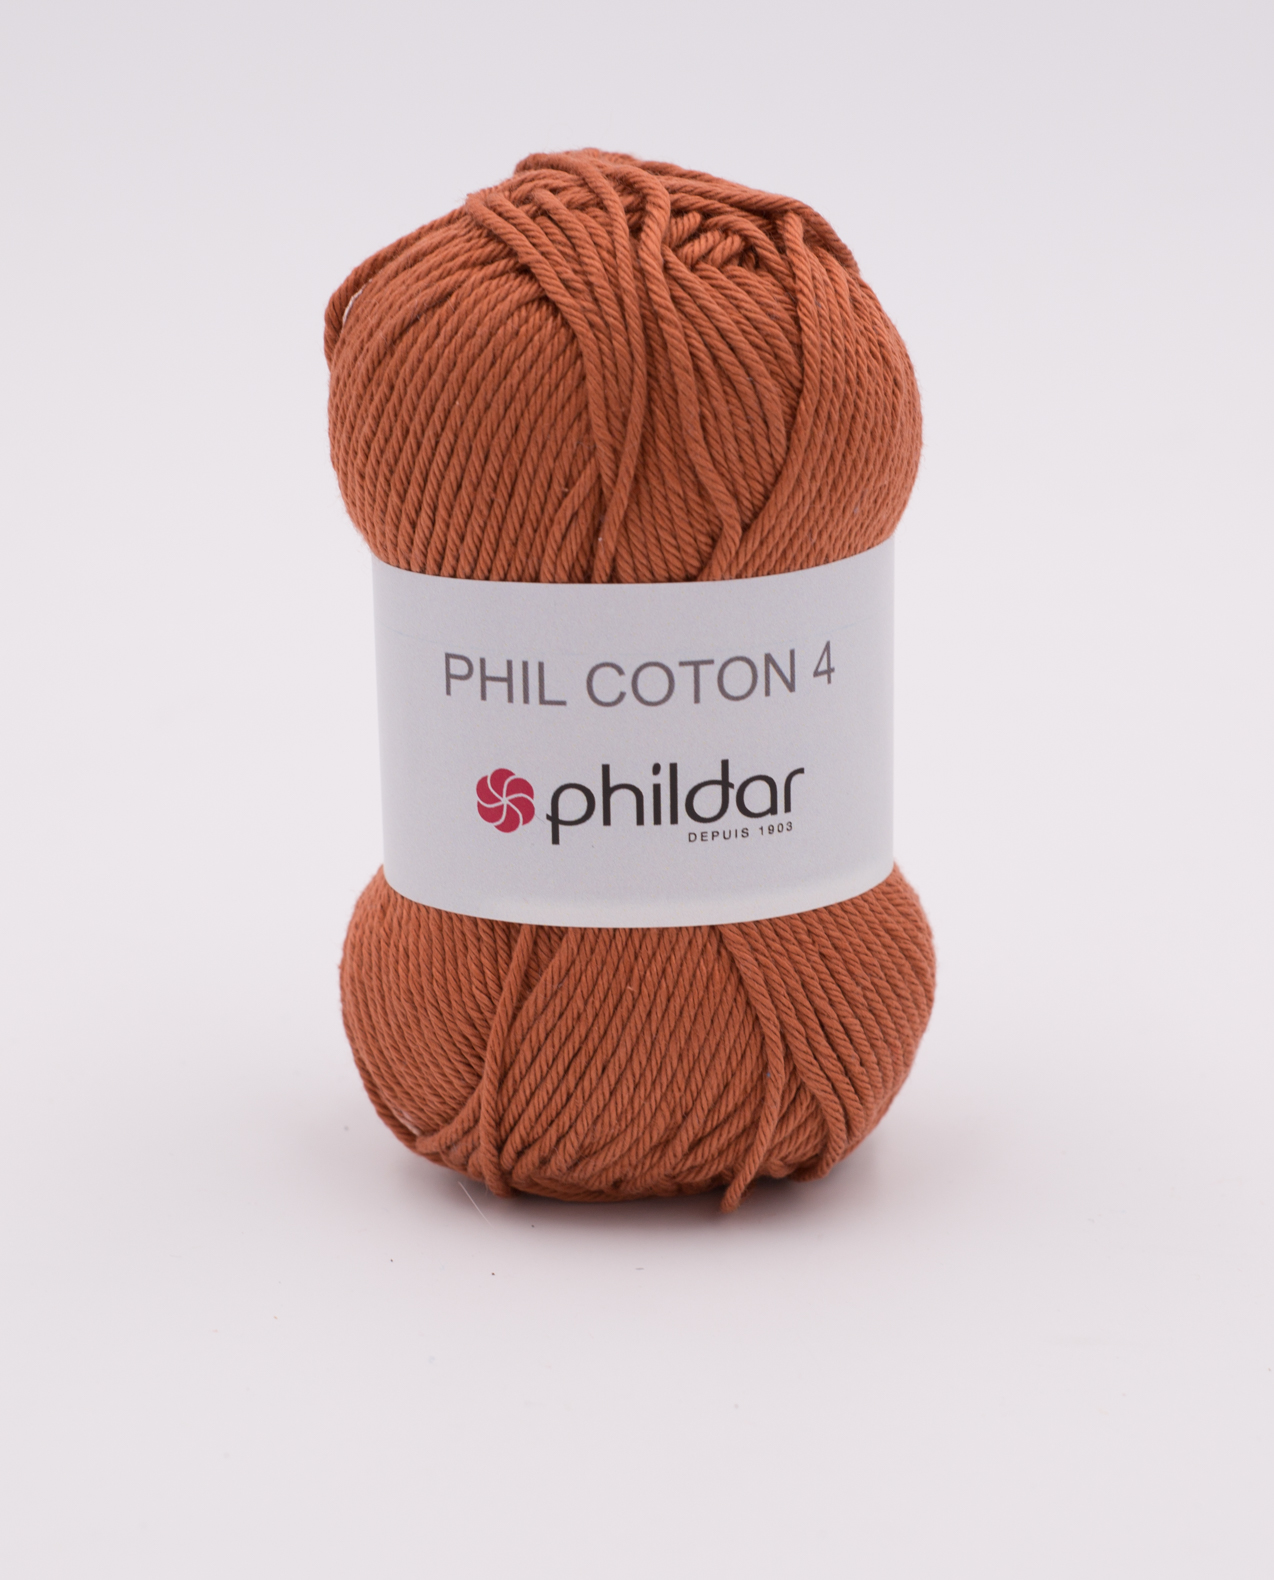 Phildar Phil Coton 3 kleur Caramel